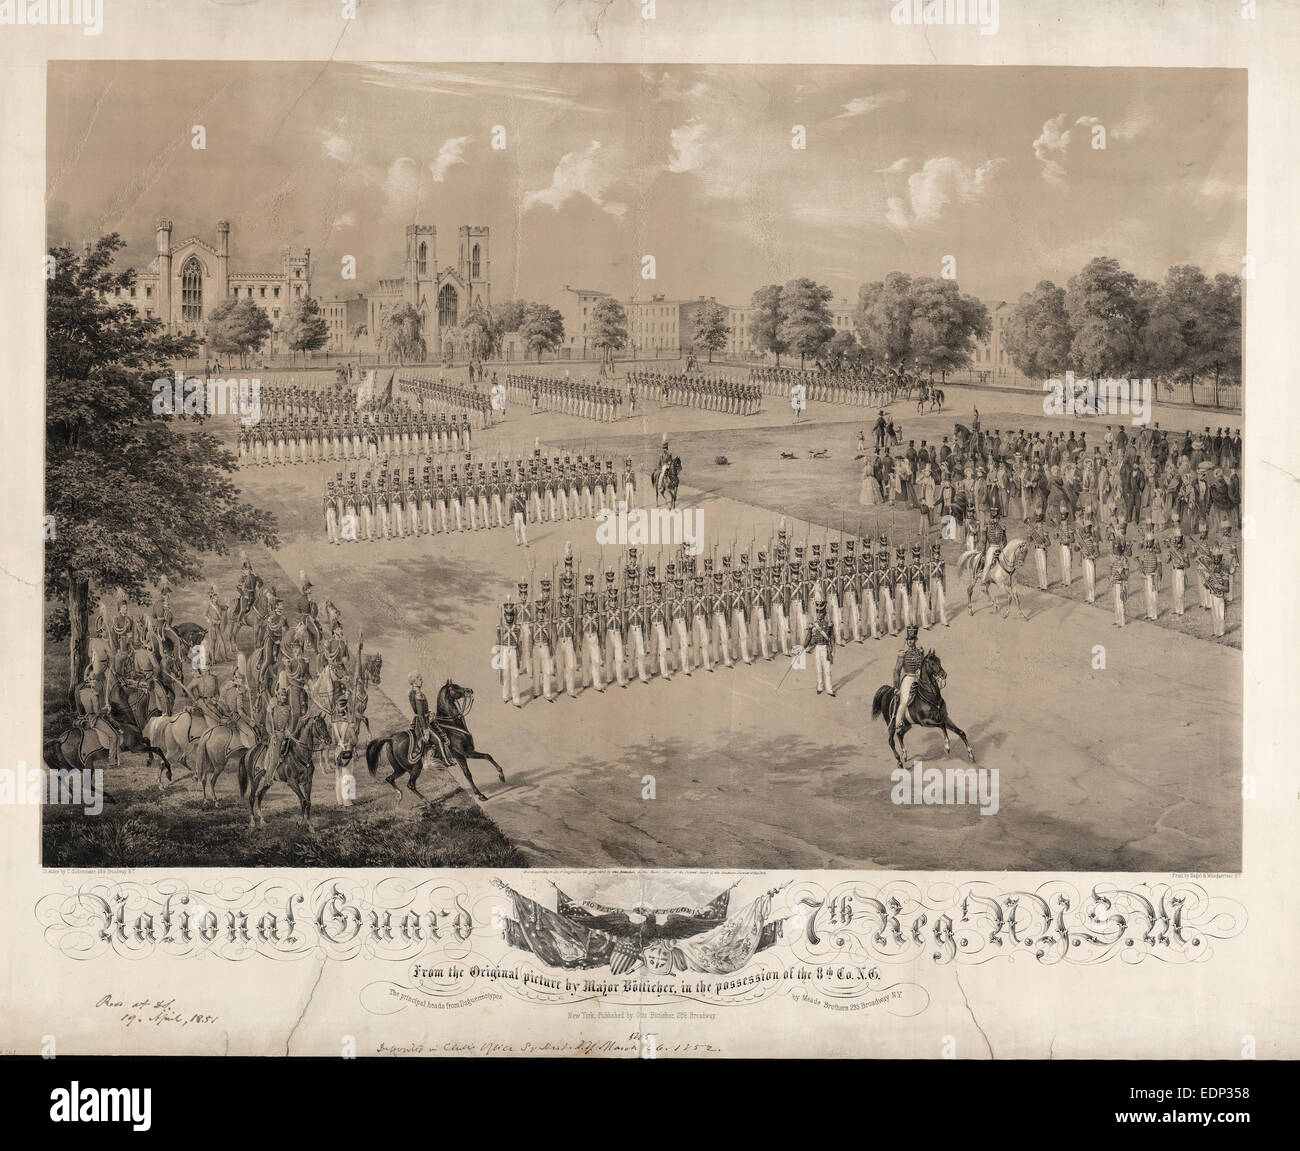 National Guard 7th Reg[imen]t N.Y.S.M. / on stone by C[harles] Gildemeister, 289 Broadway N.Y. ; print by Nagel & Weingaertner Stock Photo